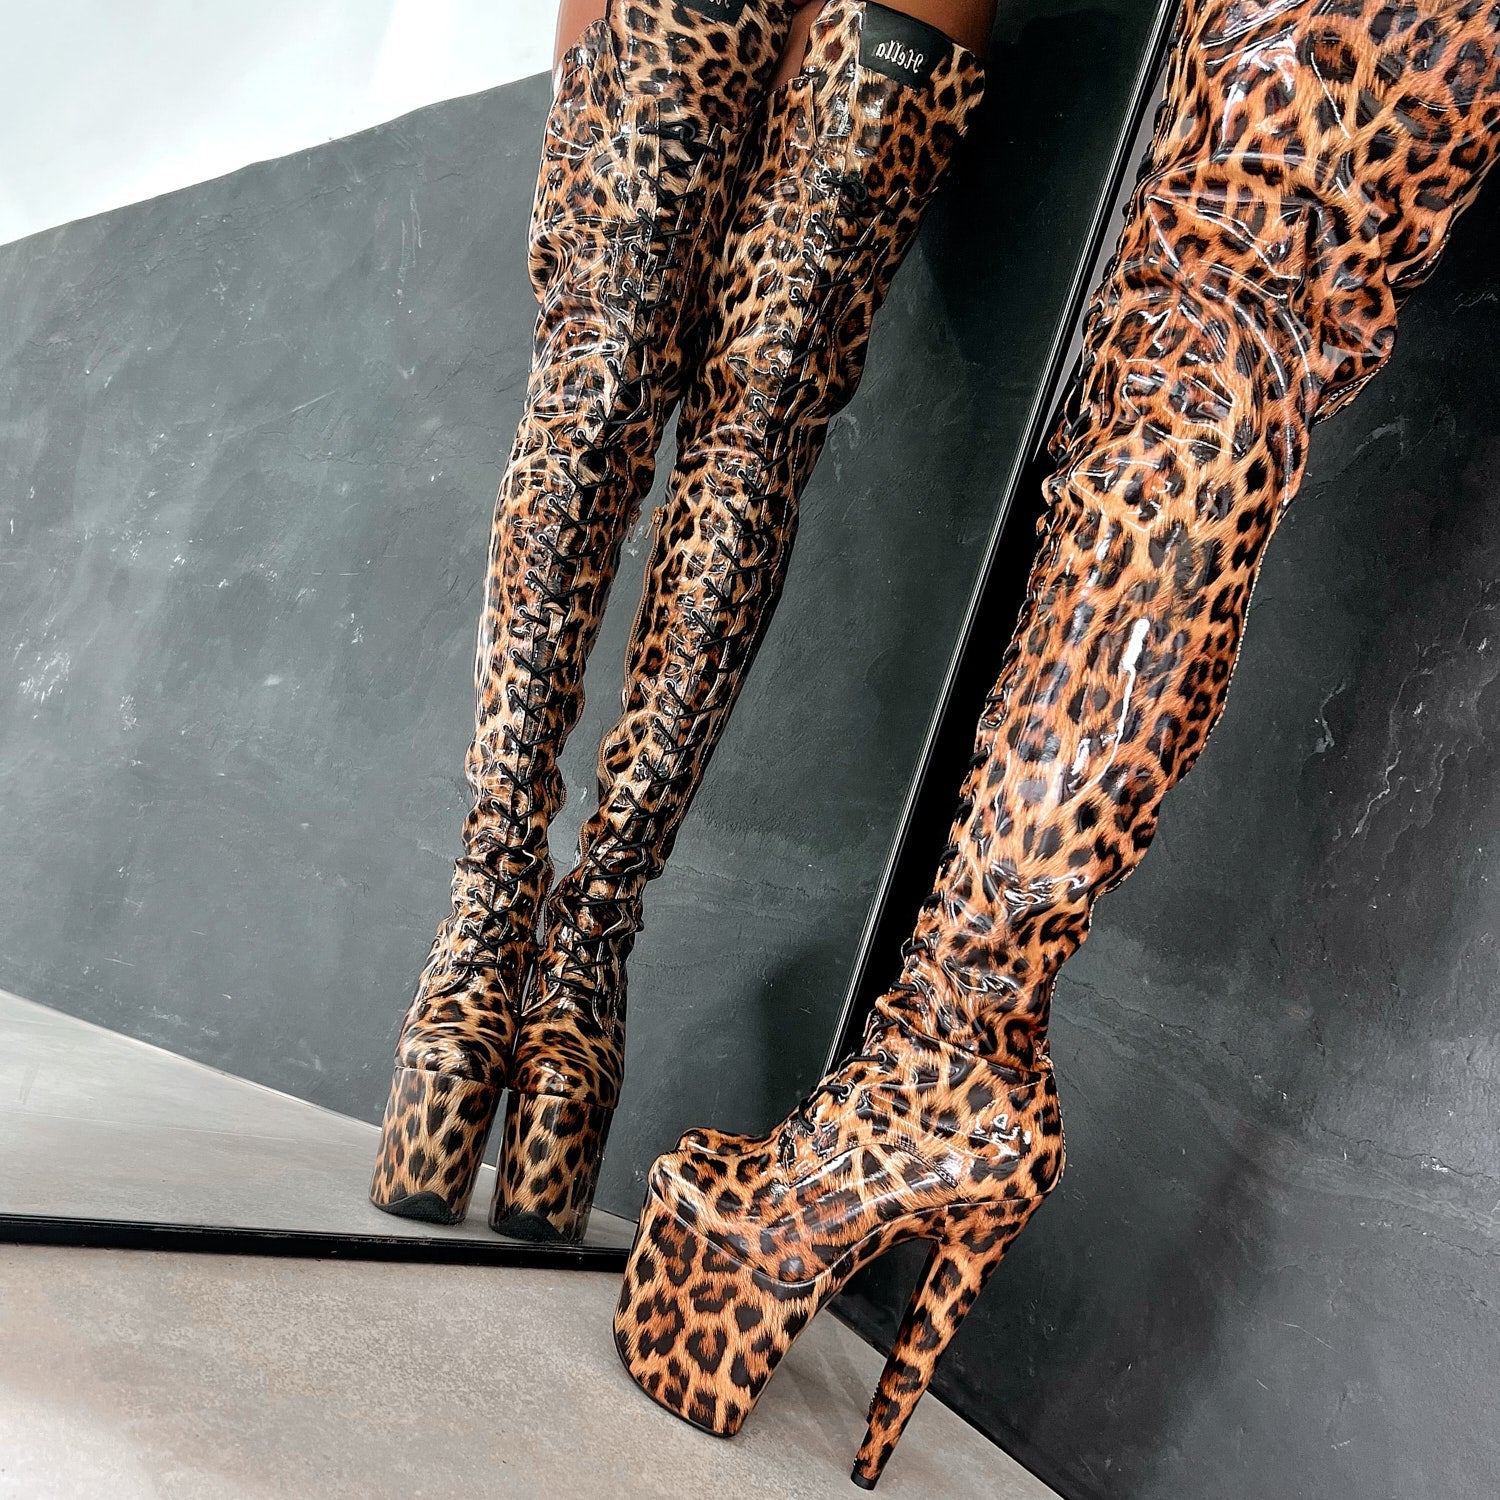 Leopard Thigh High - 8 INCH + SP, stripper shoe, stripper heel, pole heel, not a pleaser, platform, dancer, pole dance, floor work